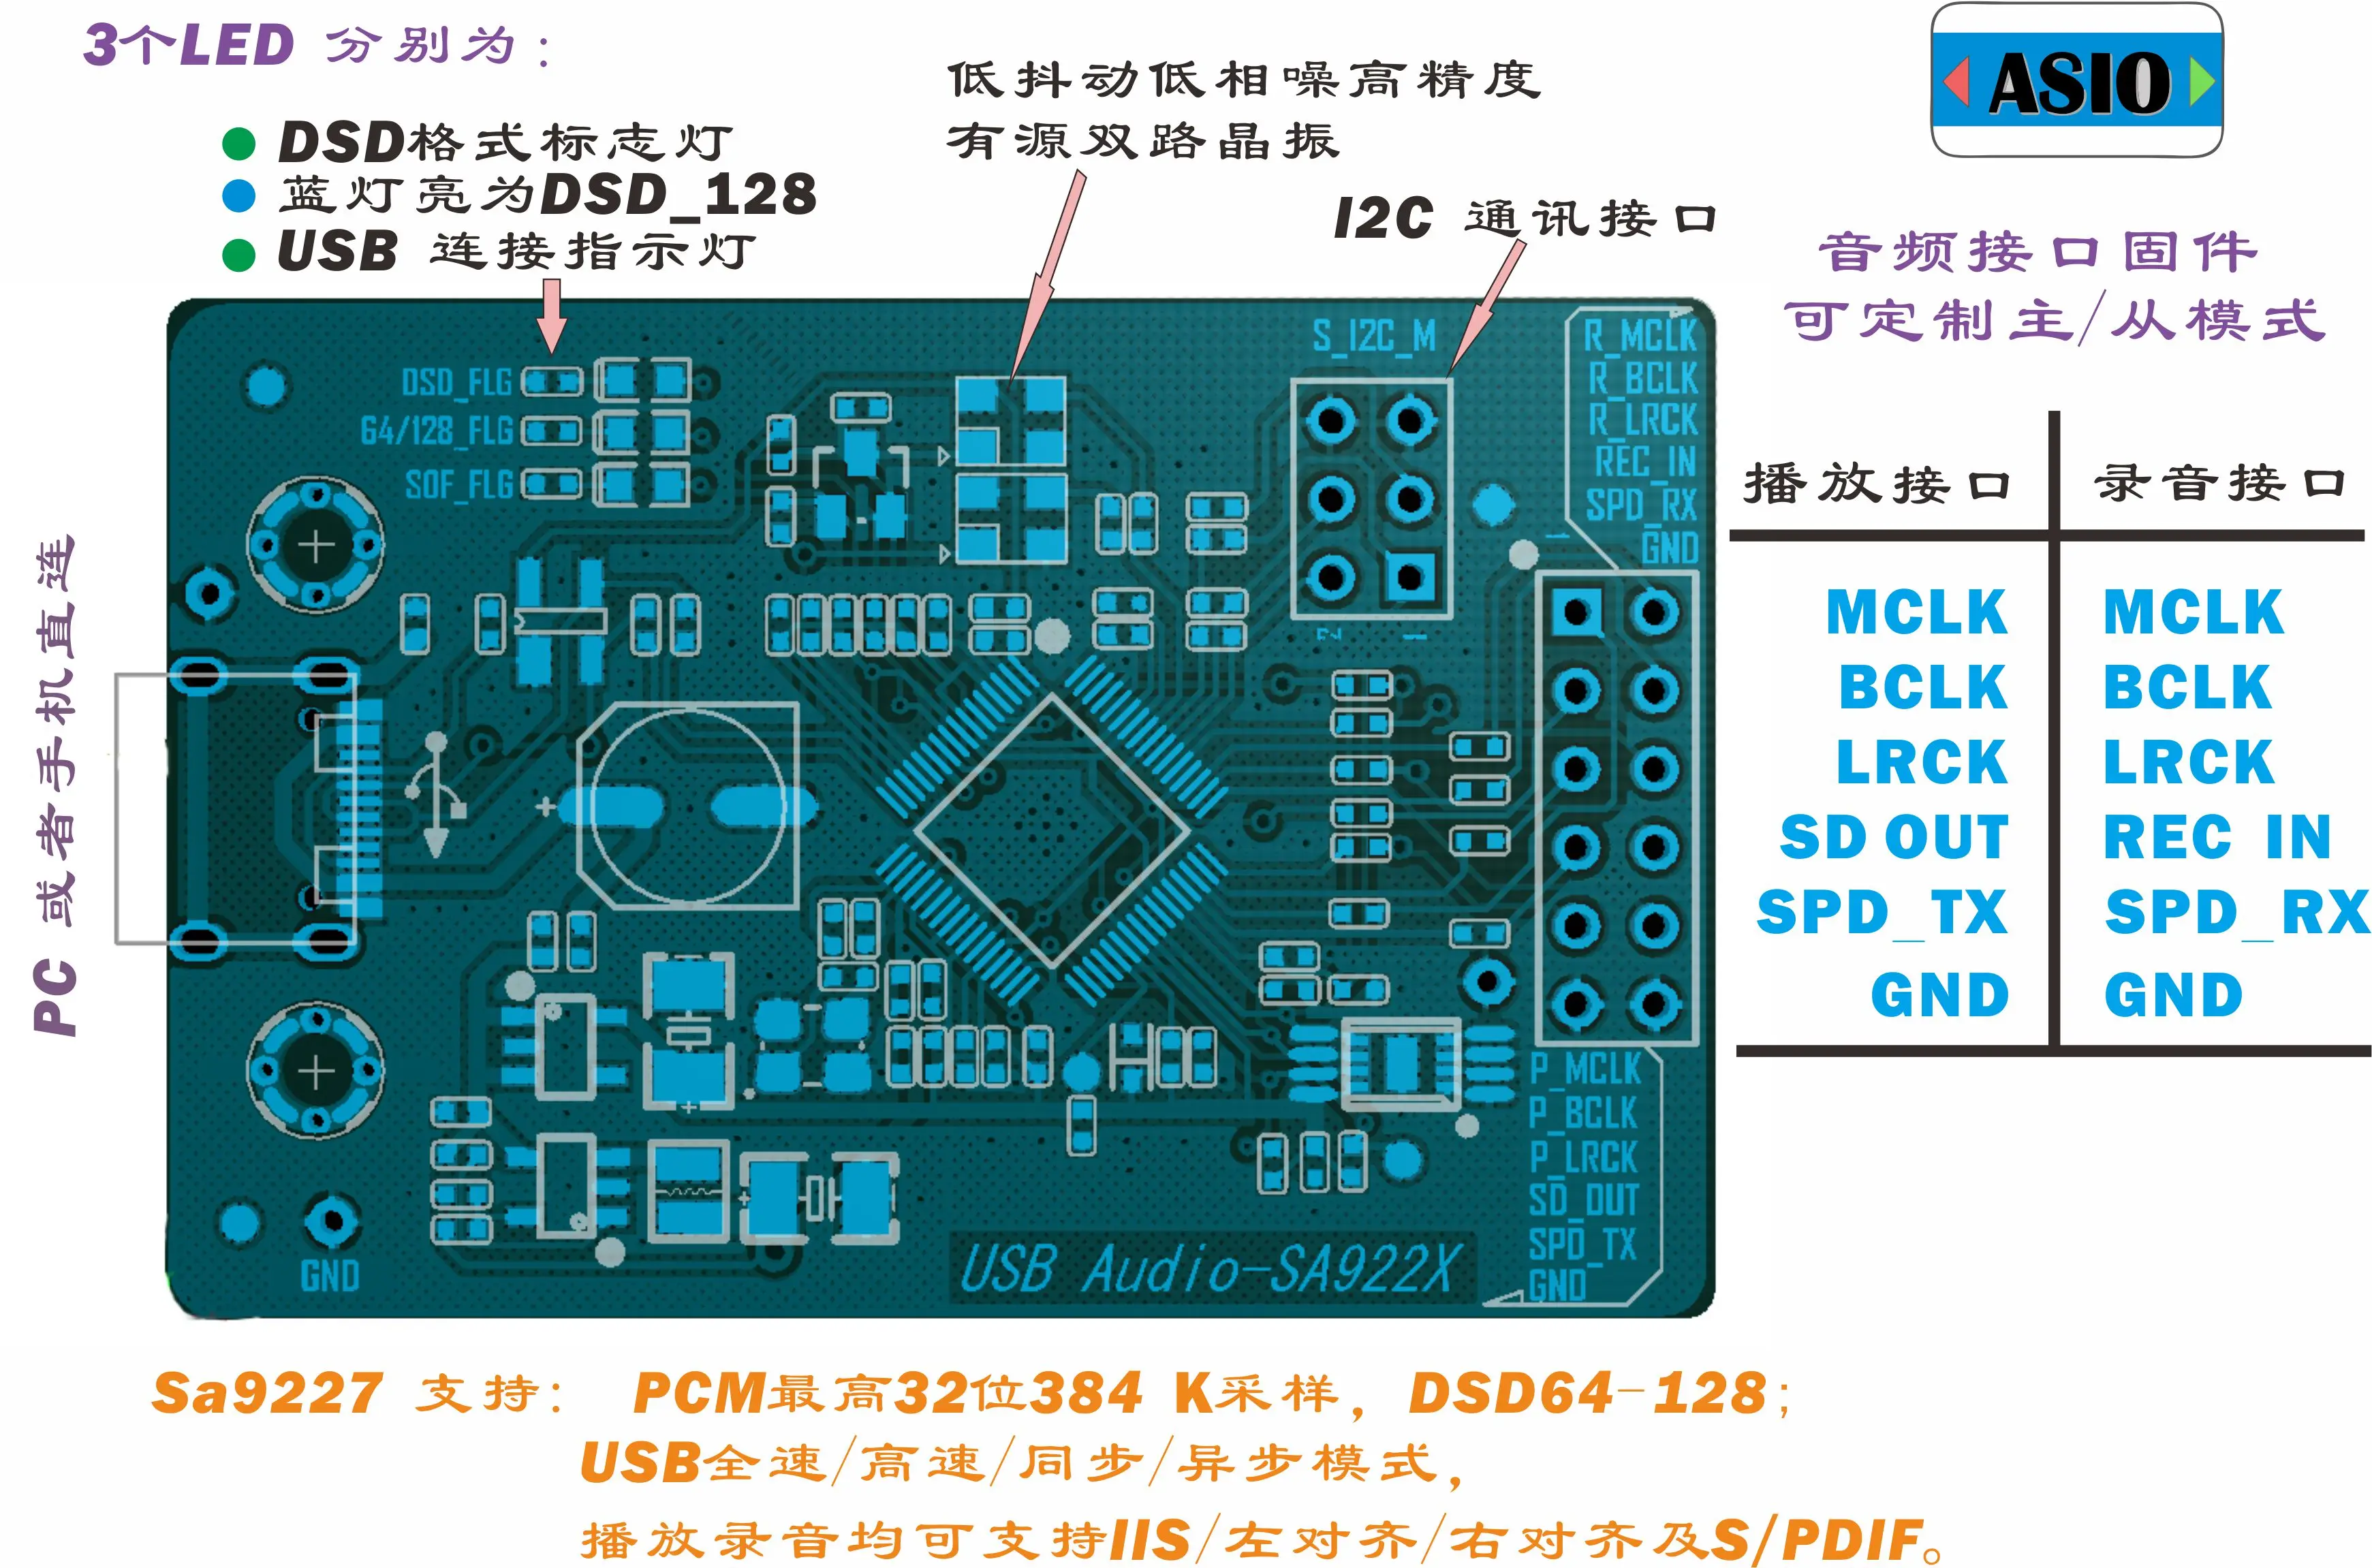 PCM5102A 32BIT/384KHZ USB DAC HIFI Asynchronous Decoder DA3 SA9227 Case 